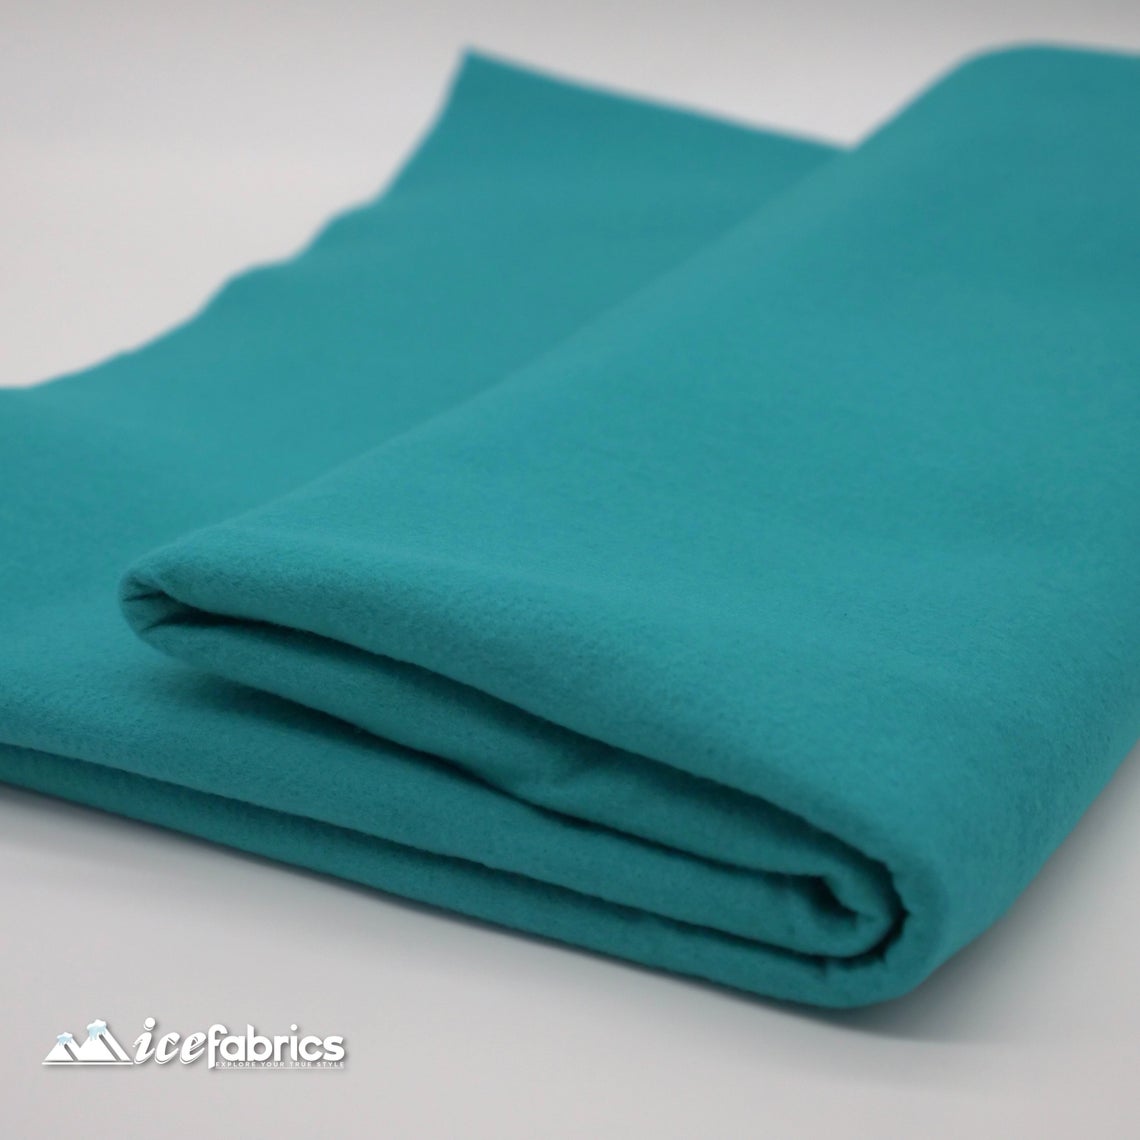 Acrylic Felt Fabric By The Roll | 20 yards | Wholesale Fabric ICE FABRICS Turquoise